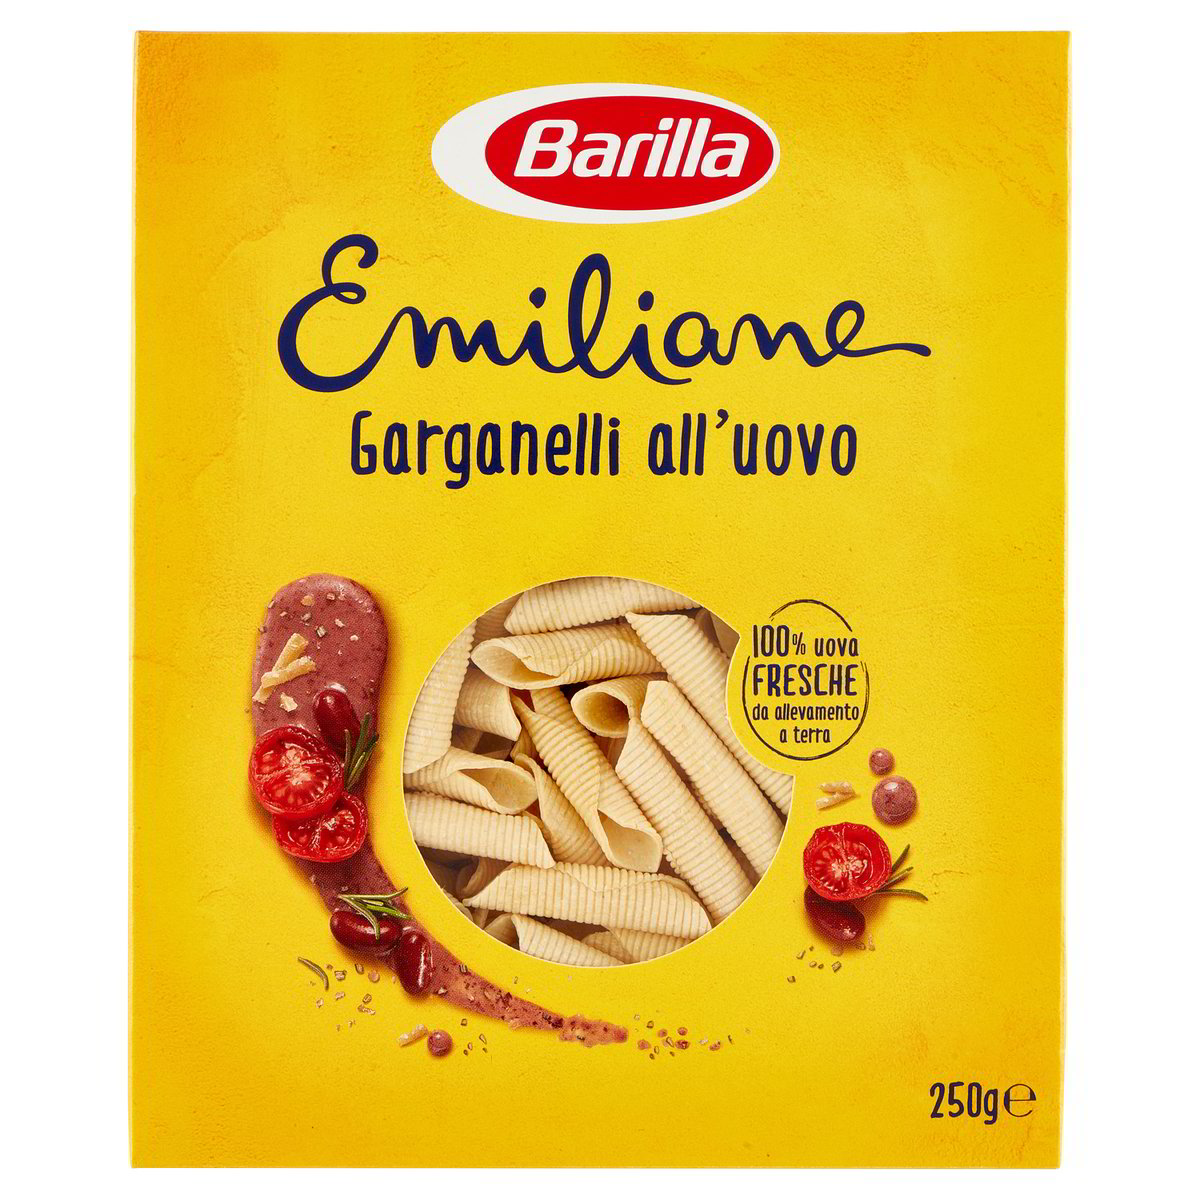 Garganelli Emiliane